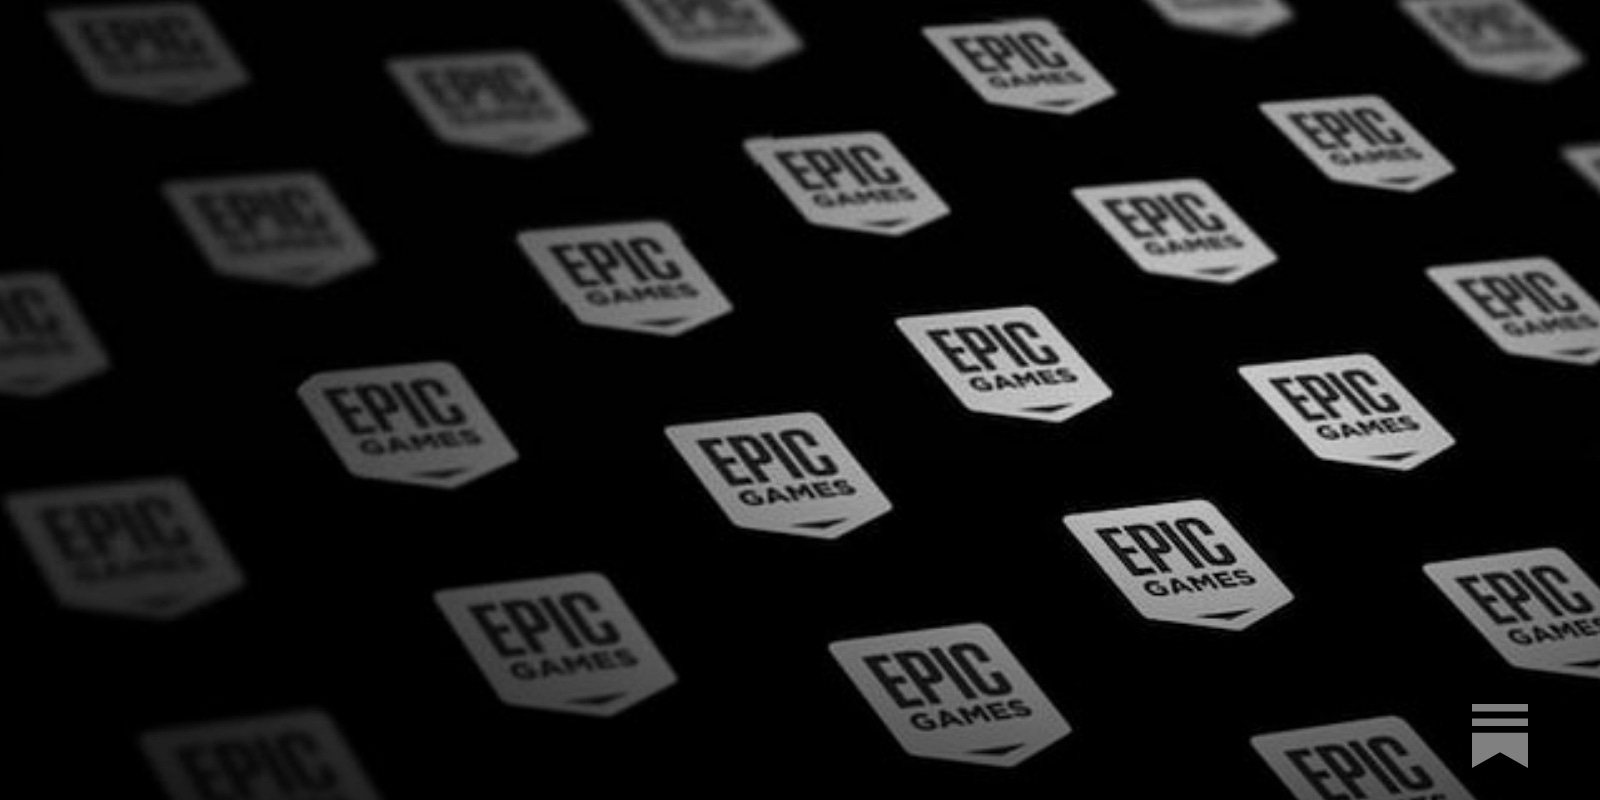 Steep X DLC - Epic Games Store